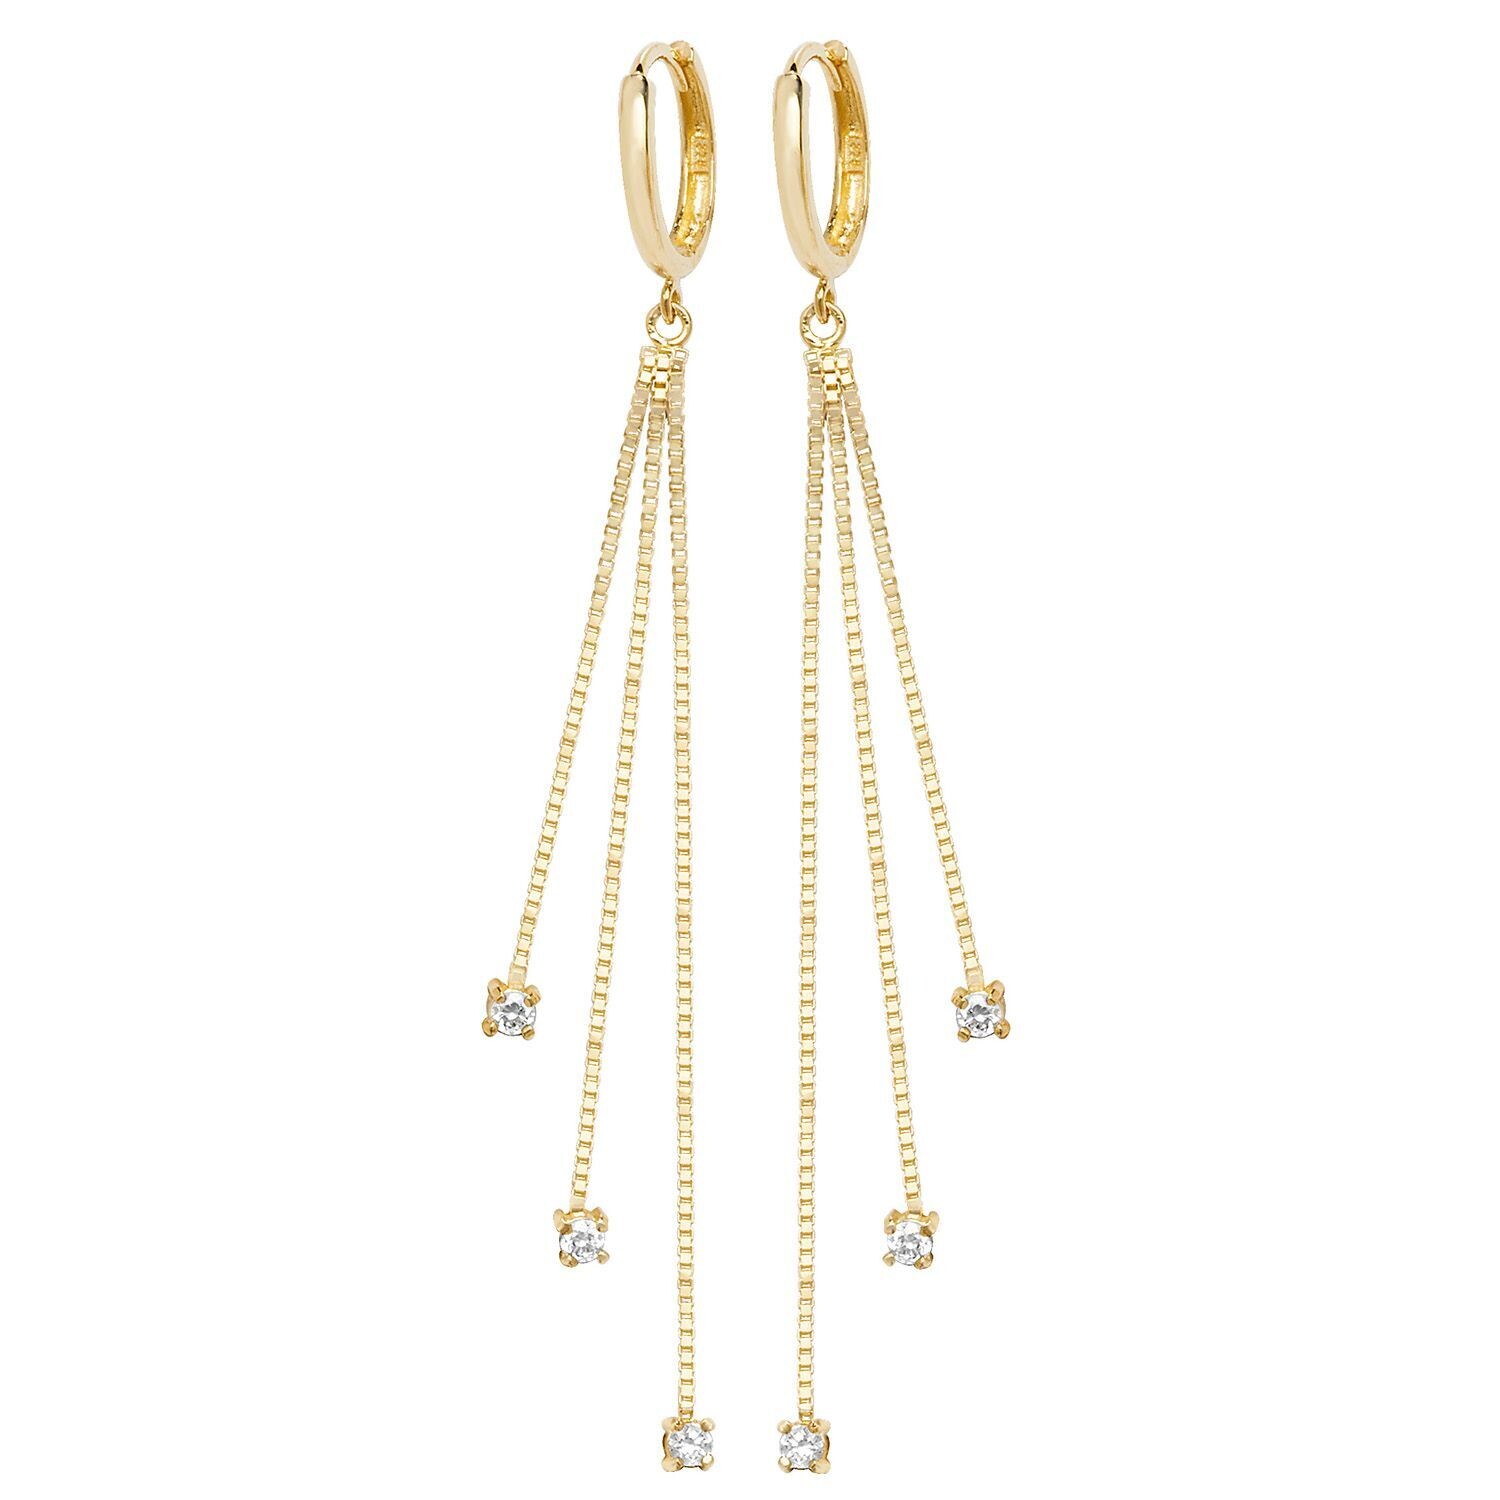 A Pair of 9 Carat Gold Cubic Zirconia Drop Earrings